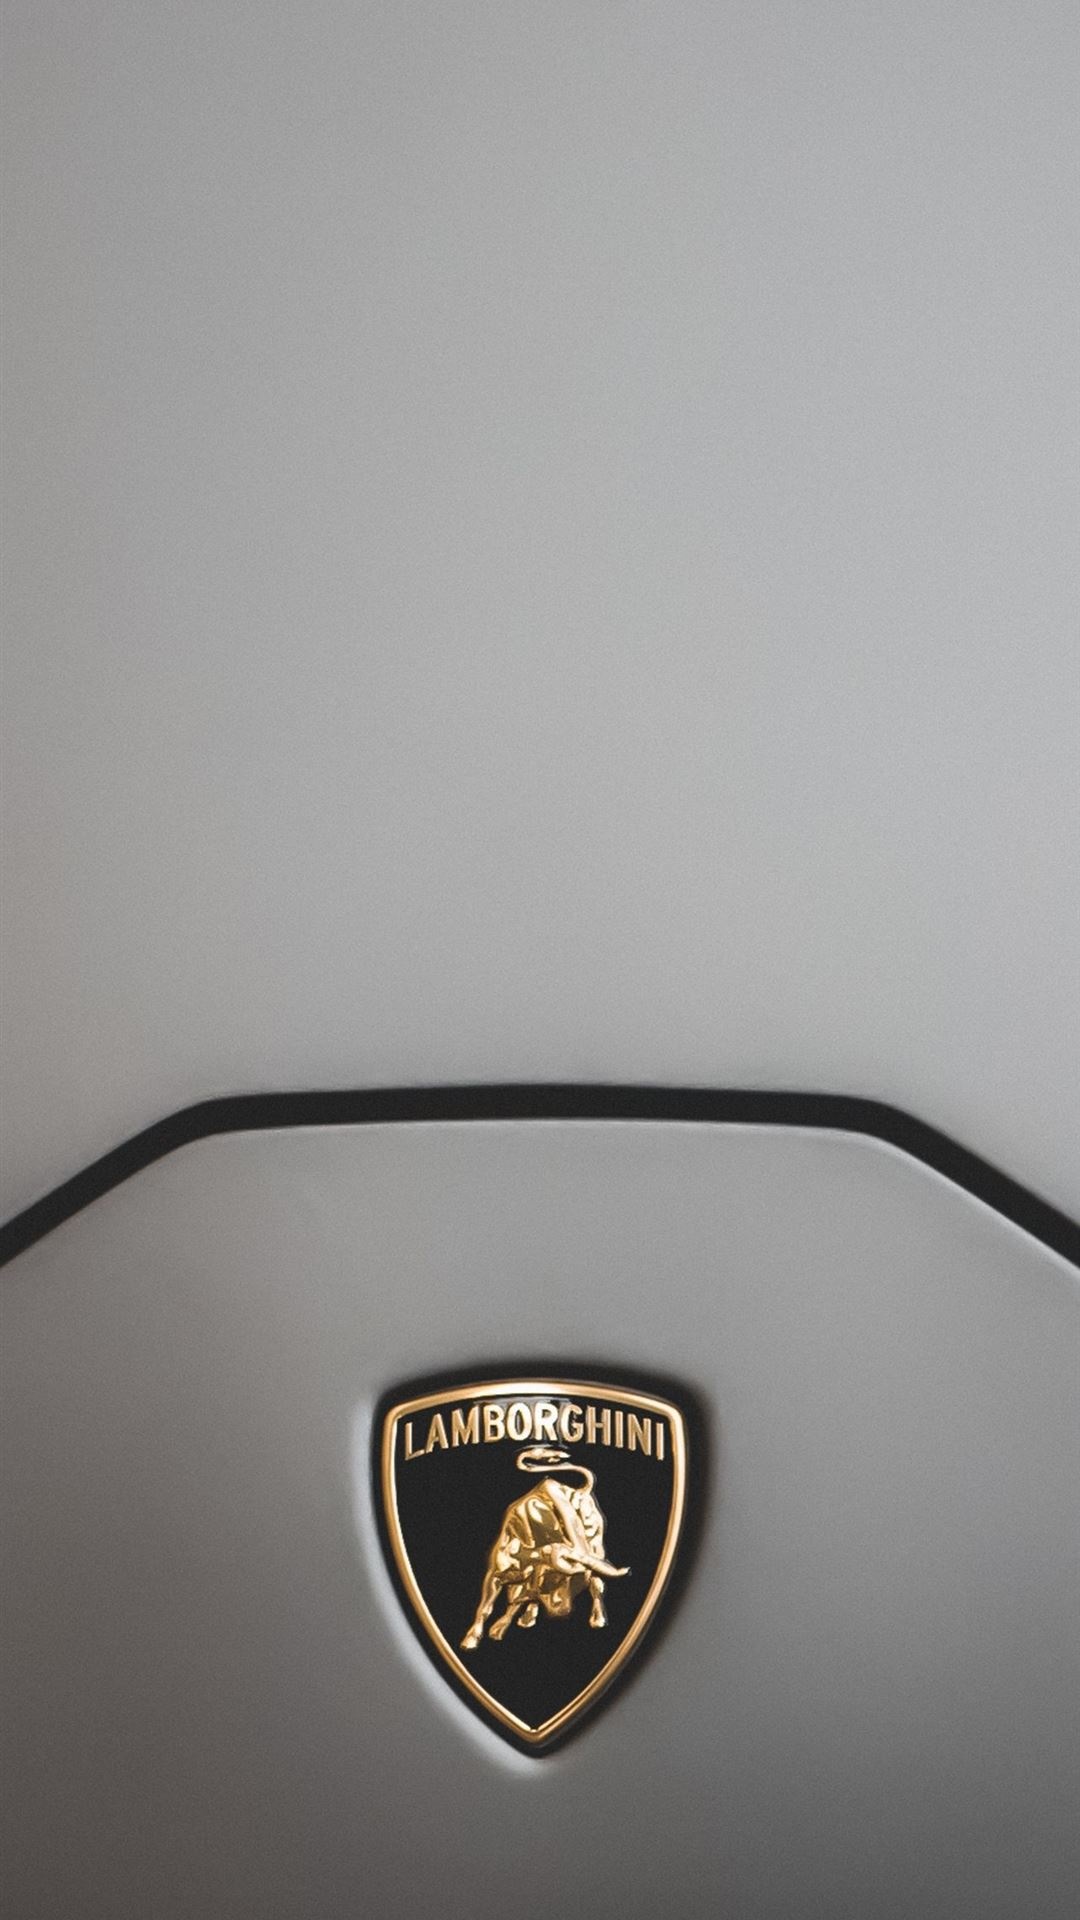 Lamborghini Sesto Elemento, Iphone wallpapers, Free download, 1080x1920 Full HD Phone